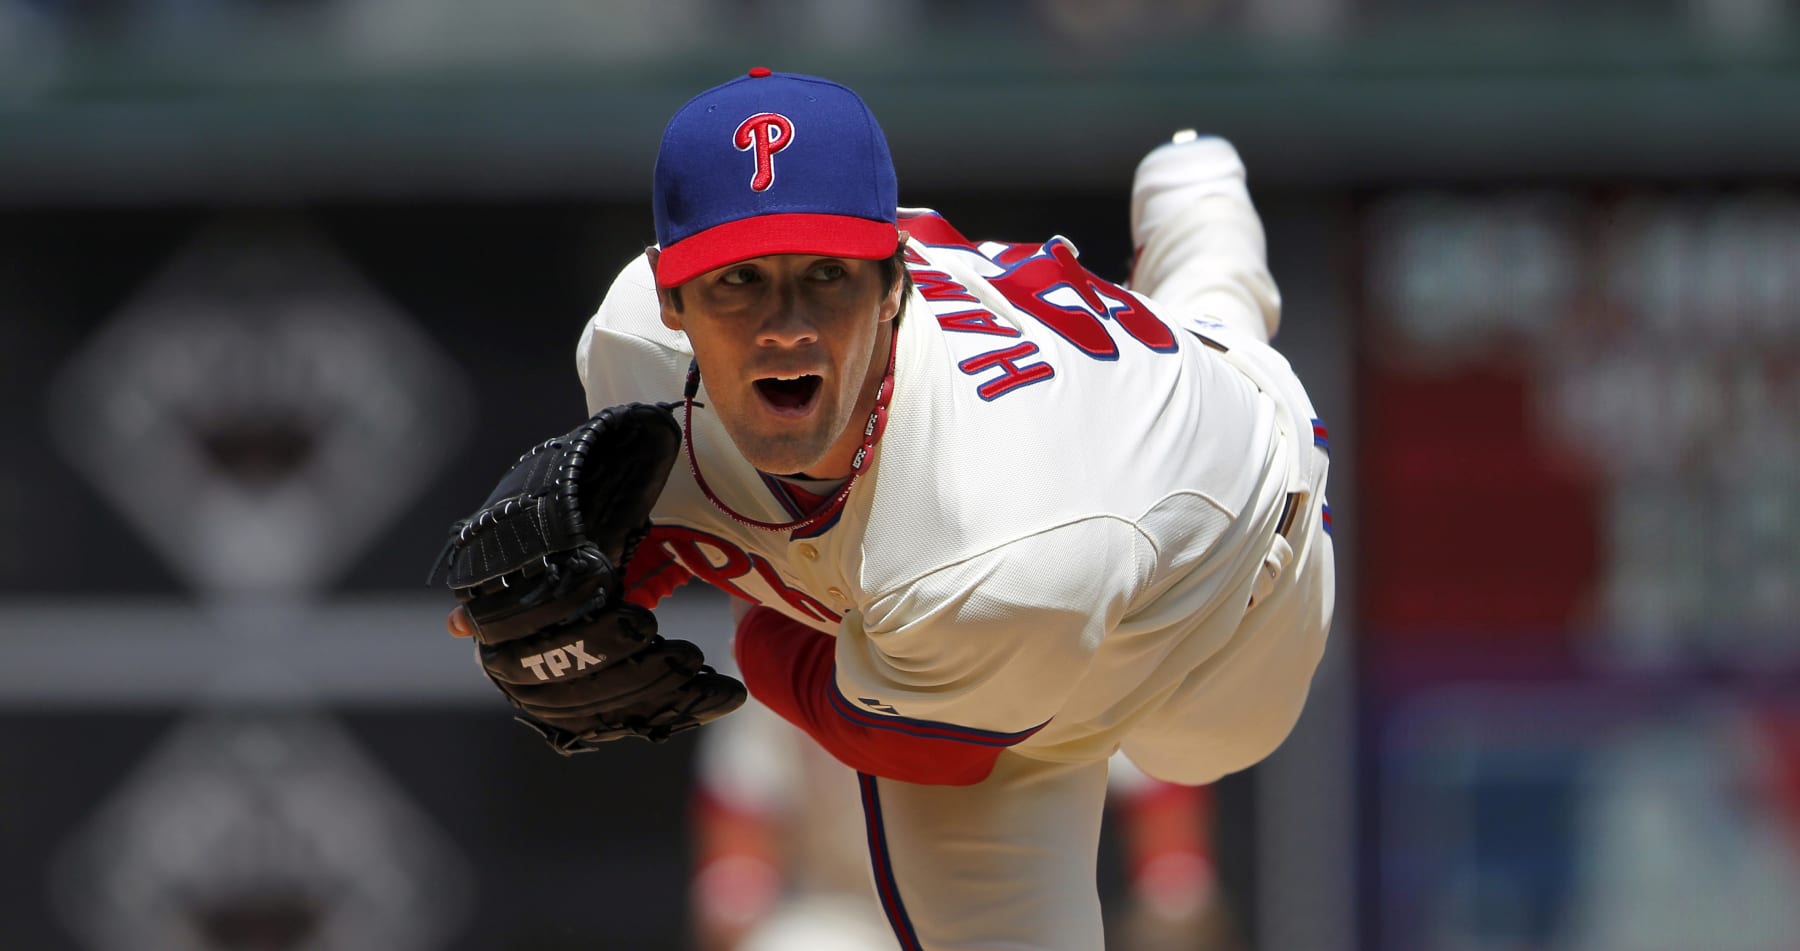 Sox Sign A.J. Pierzynski: AKA - The Most Hated Man in Baseball